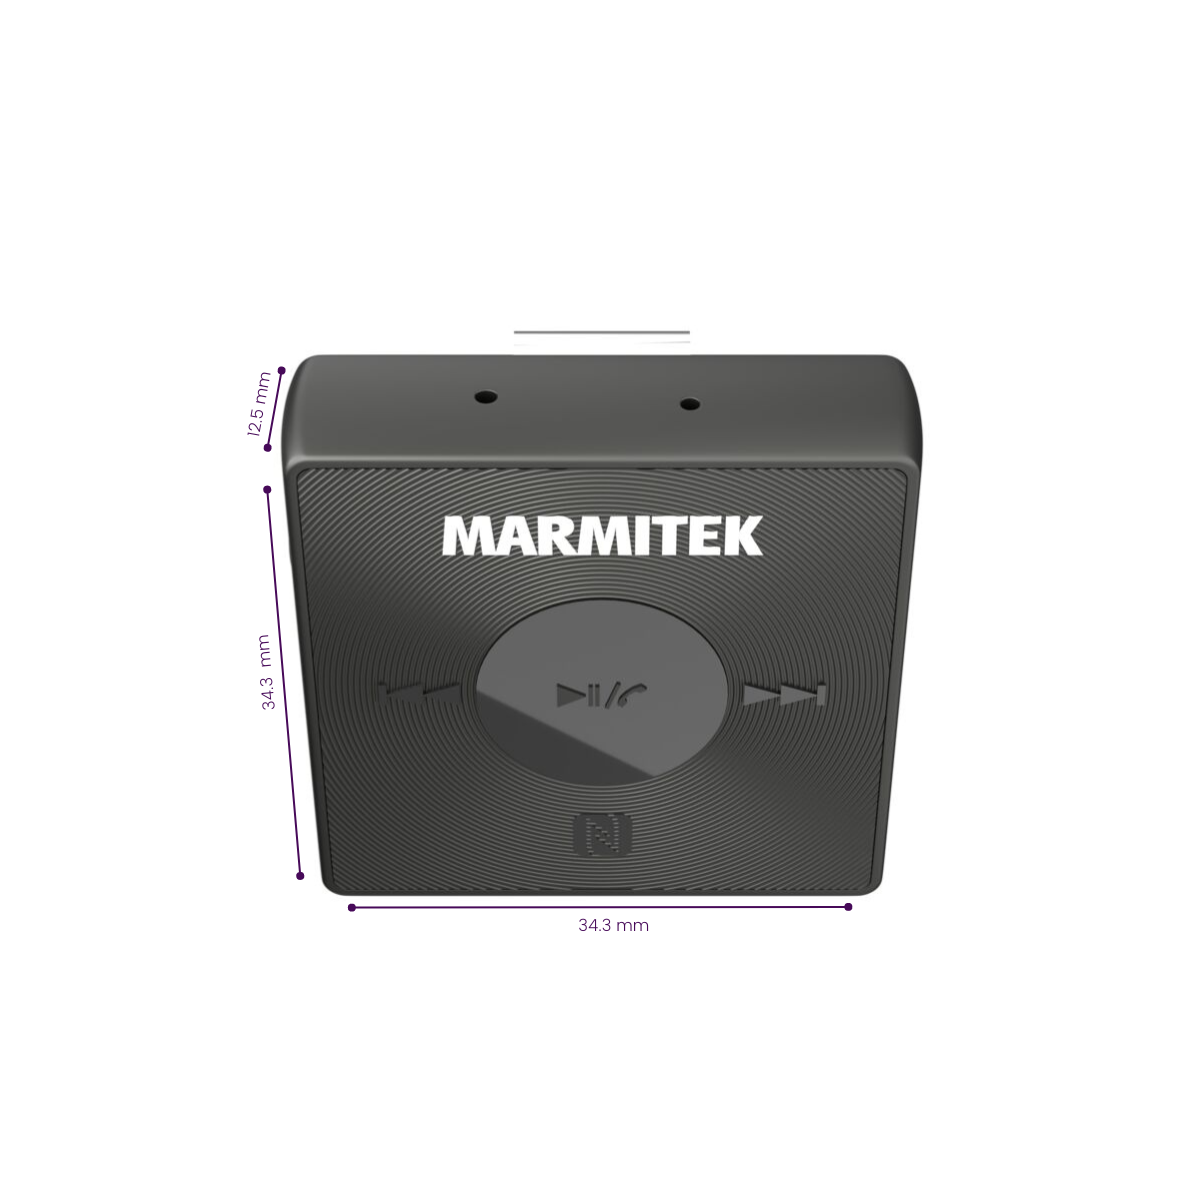 BoomBoom 76 - Bluetooth Receiver - Product Dimensions Image | Marmitek